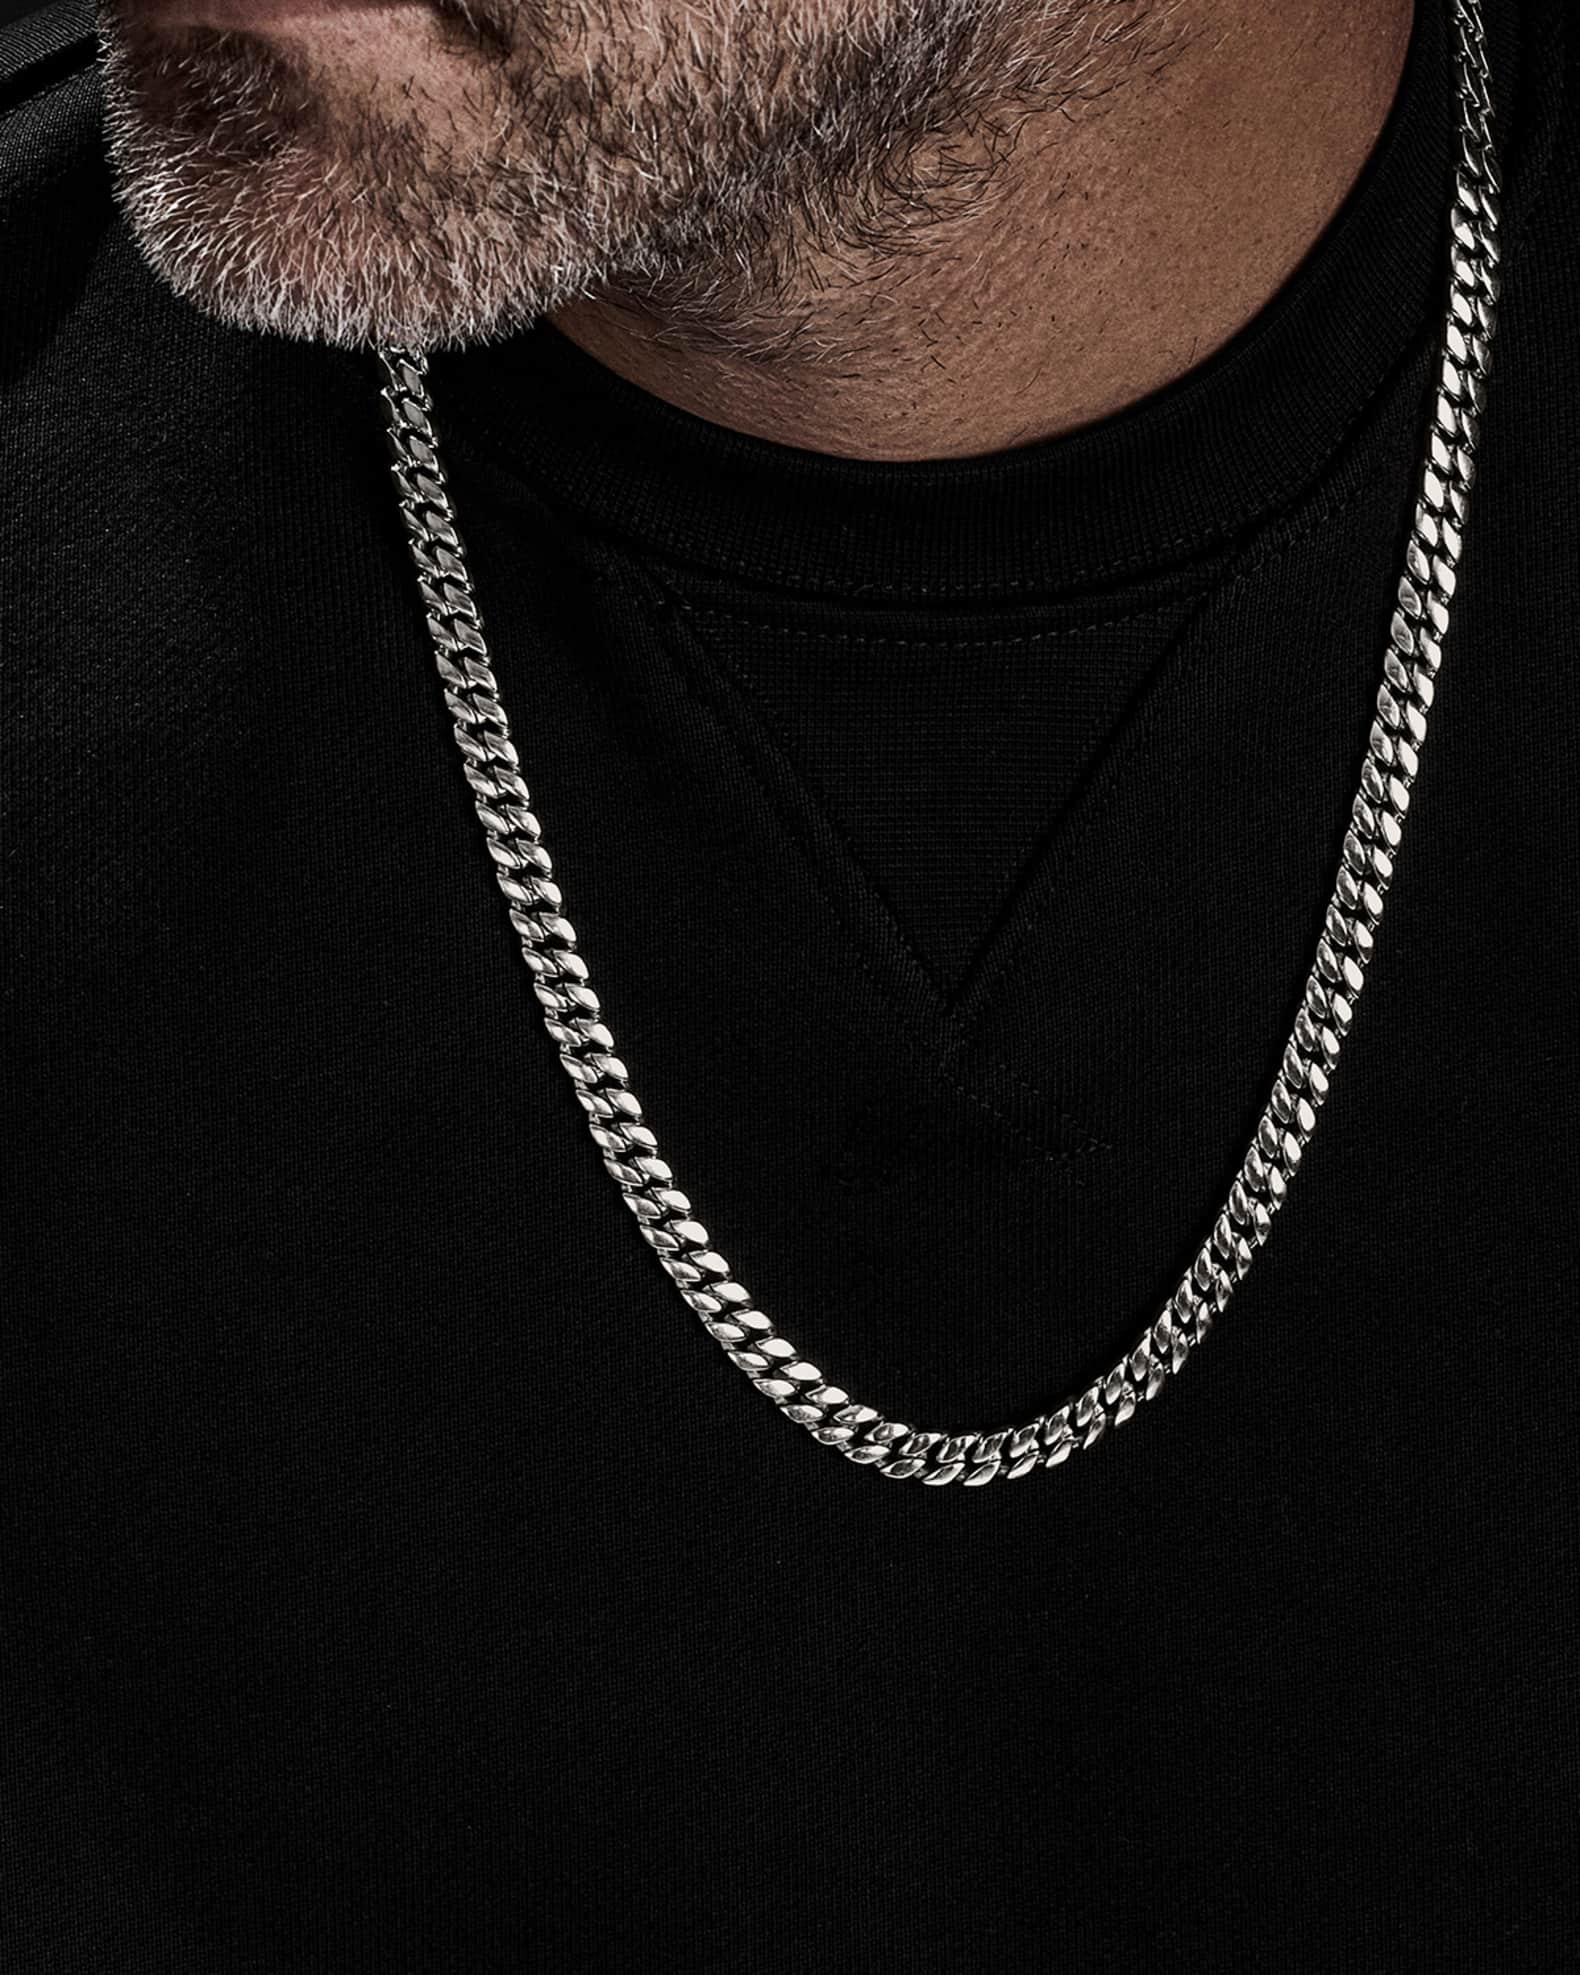 David Yurman Men's Curb Chain Necklace in Silver, 8mm, 24